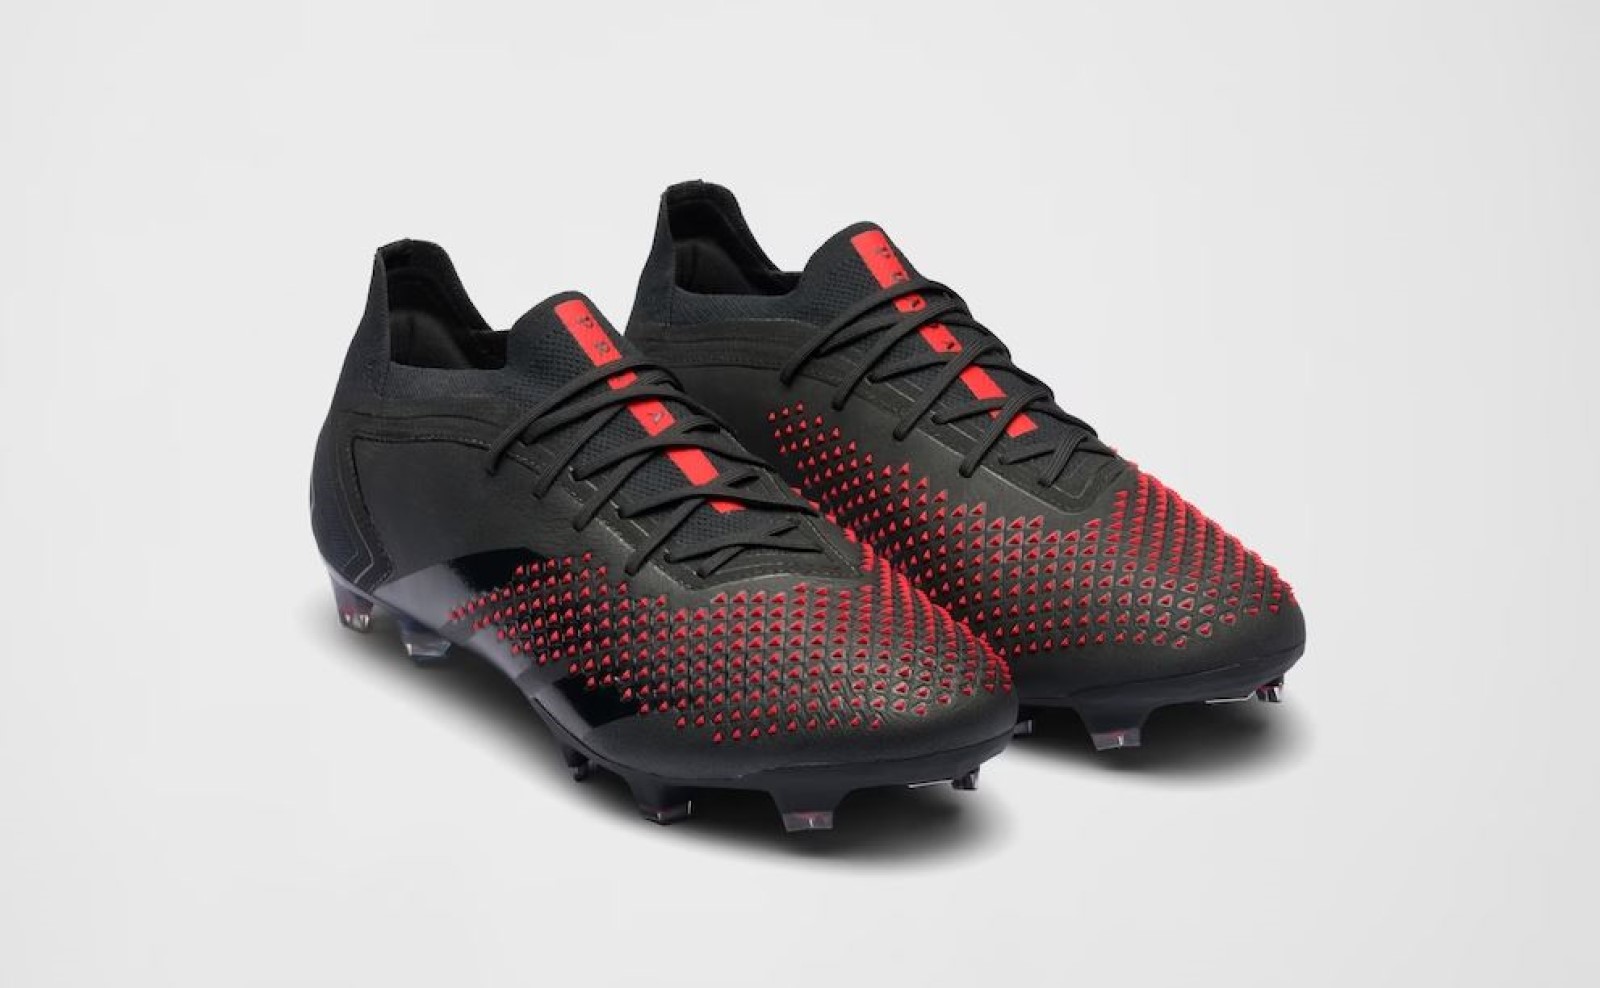 Tenis de futbol de lujo: adidas Football for Prada por fin llega